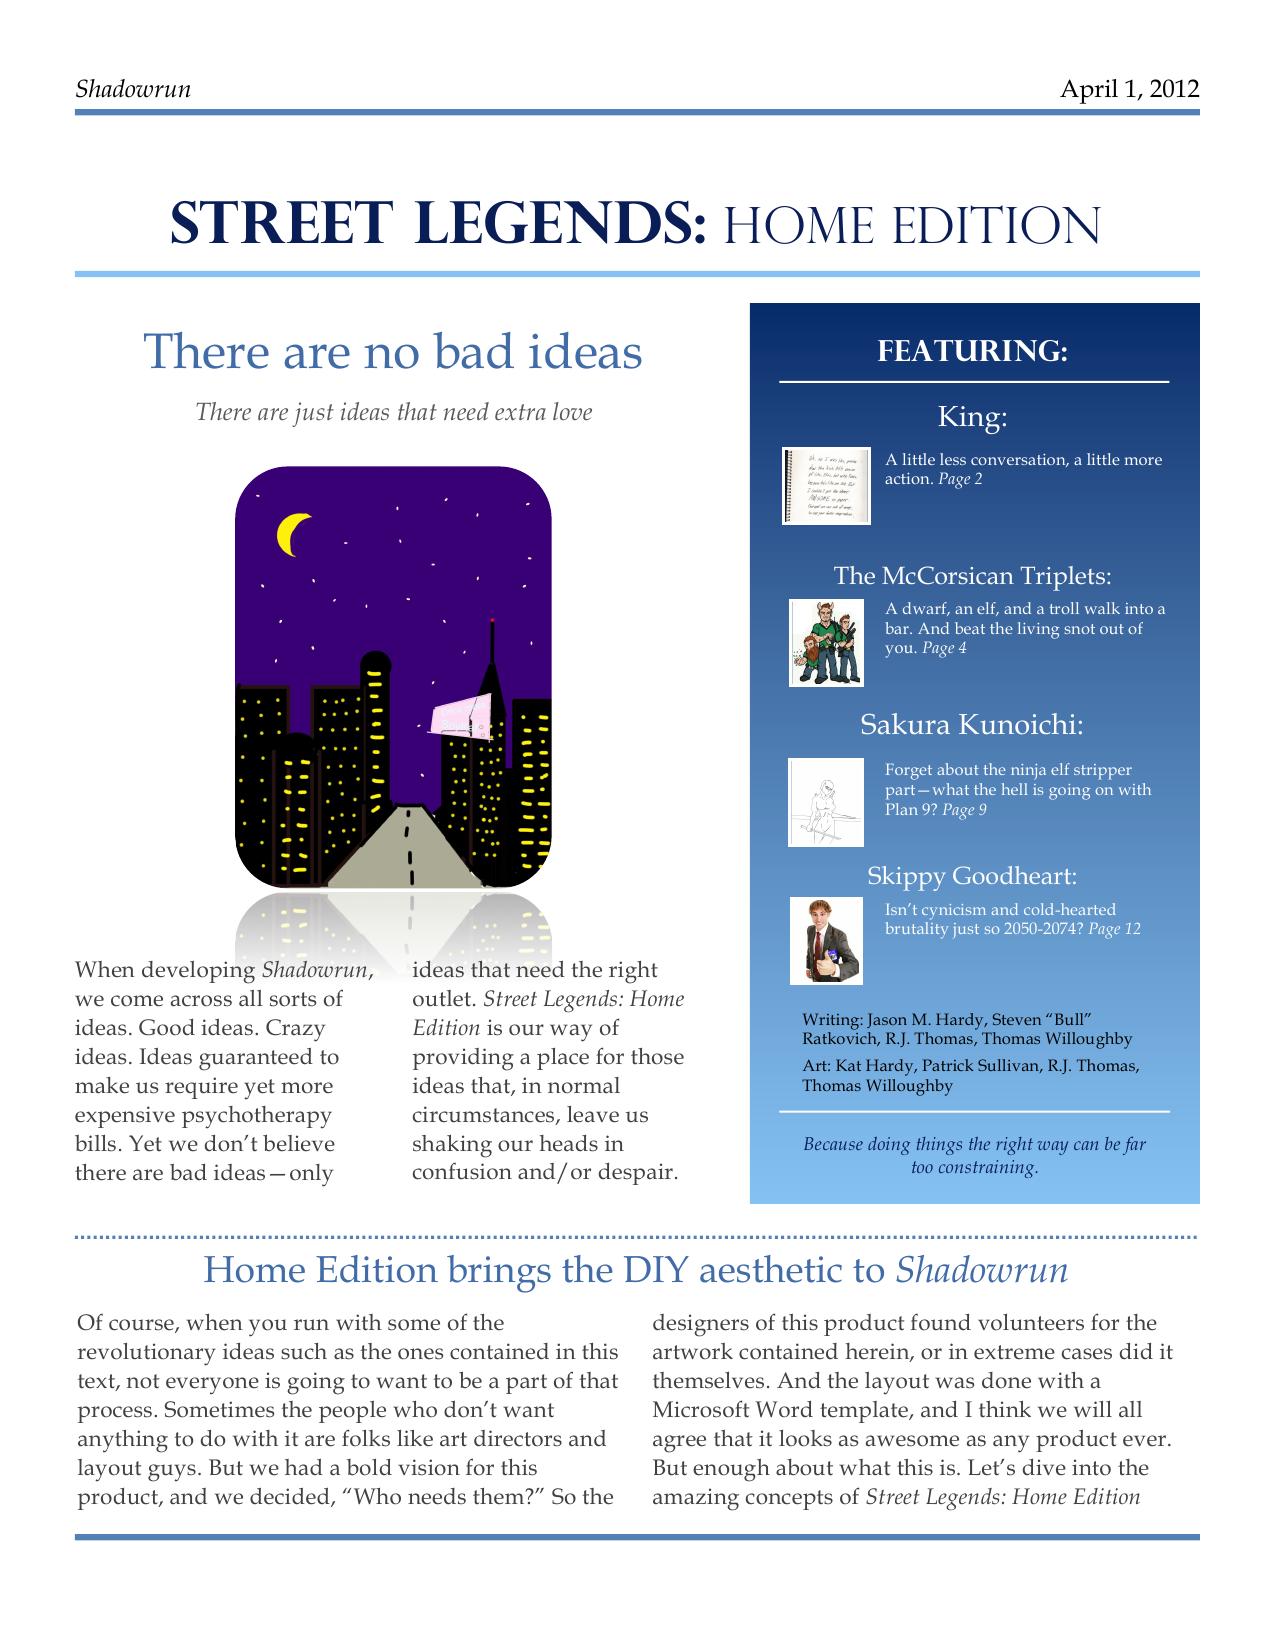 Microsoft Word - Street Legends Home Edition.docx